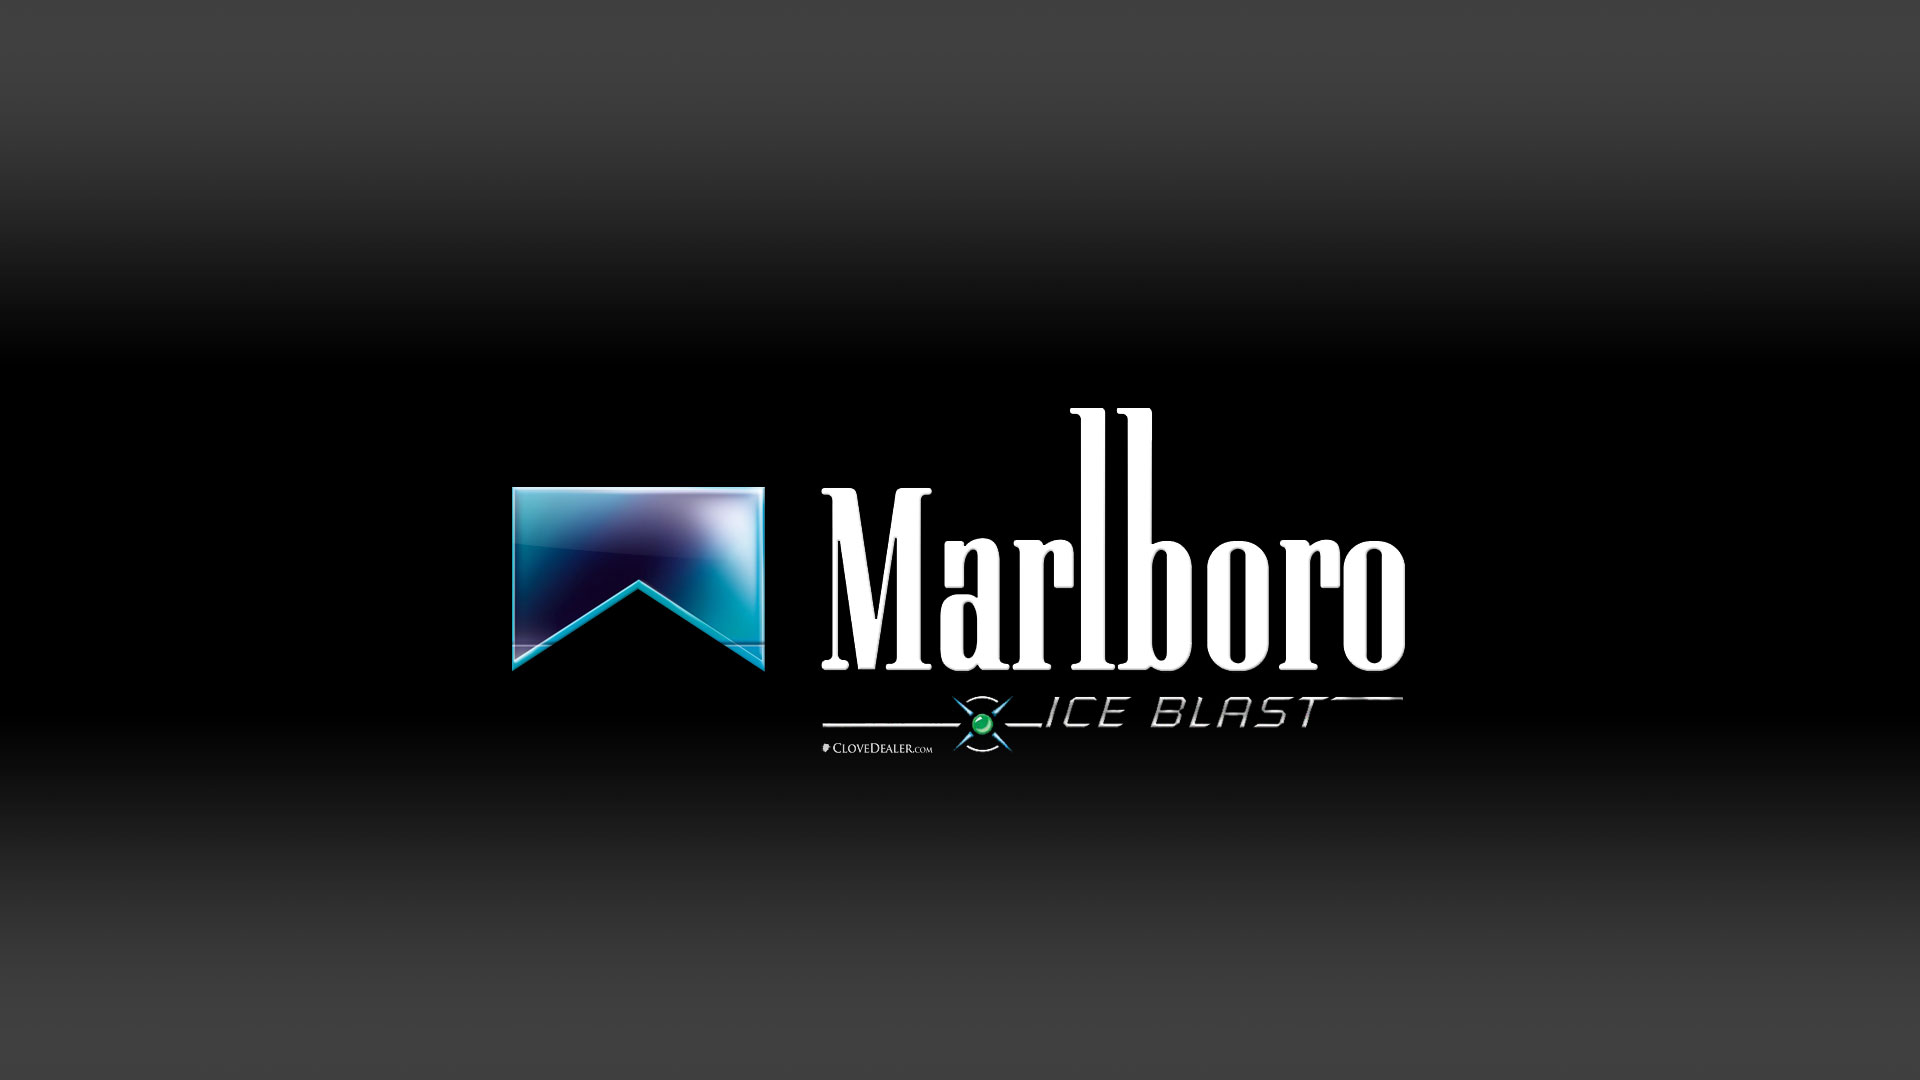 Marlboro Ice Cigarettes Wallpaper HD by 1920x1080